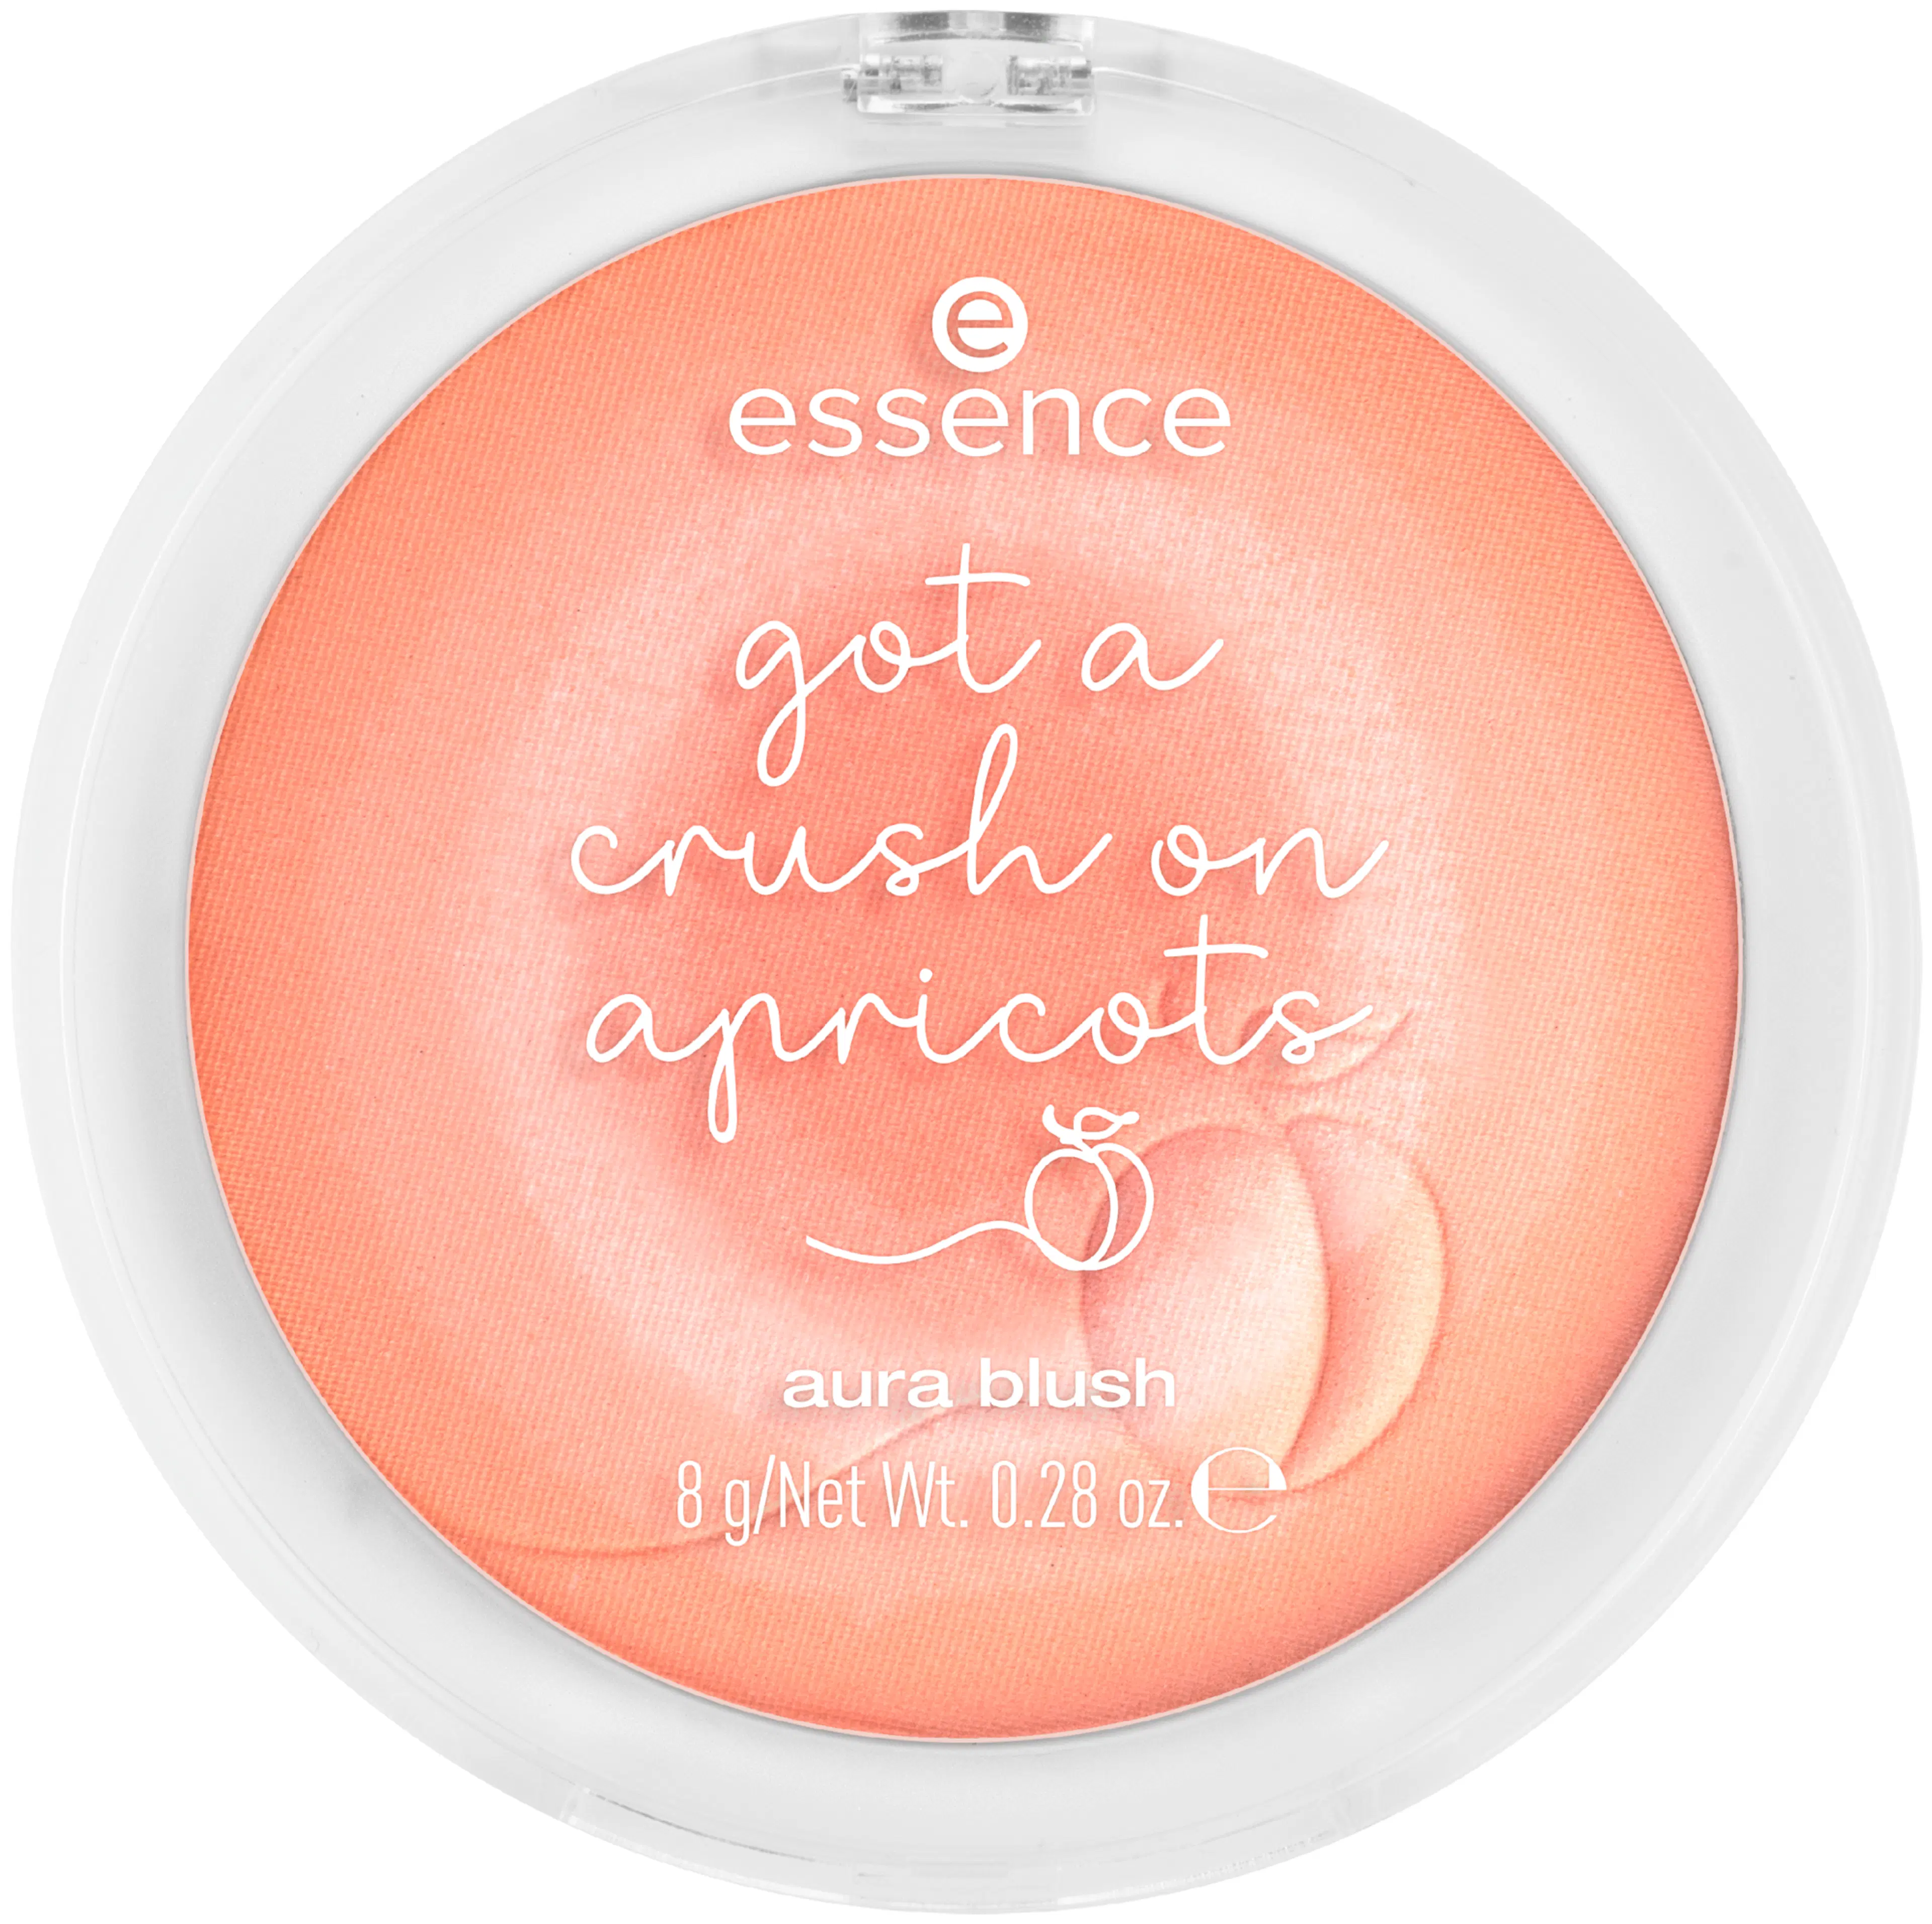 essence got a crush on apricots aura poskipuna